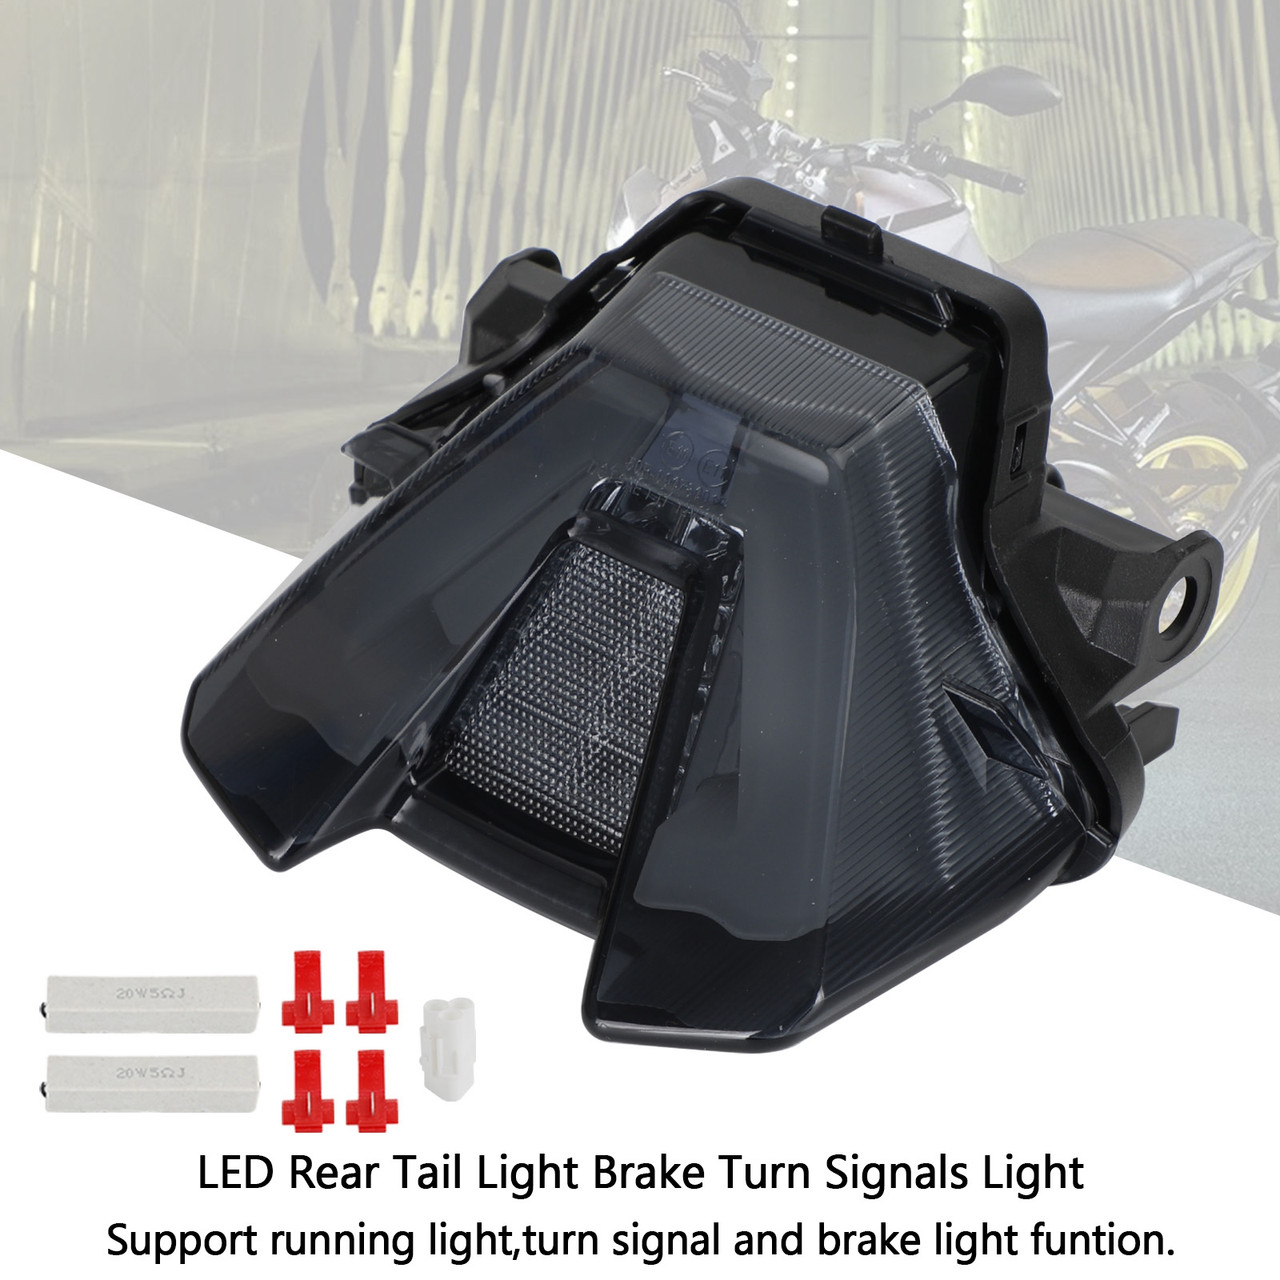 LED Rear Tail Light Brake Turn Signals For Yamaha MT-07 MT07 2021-2023 Black